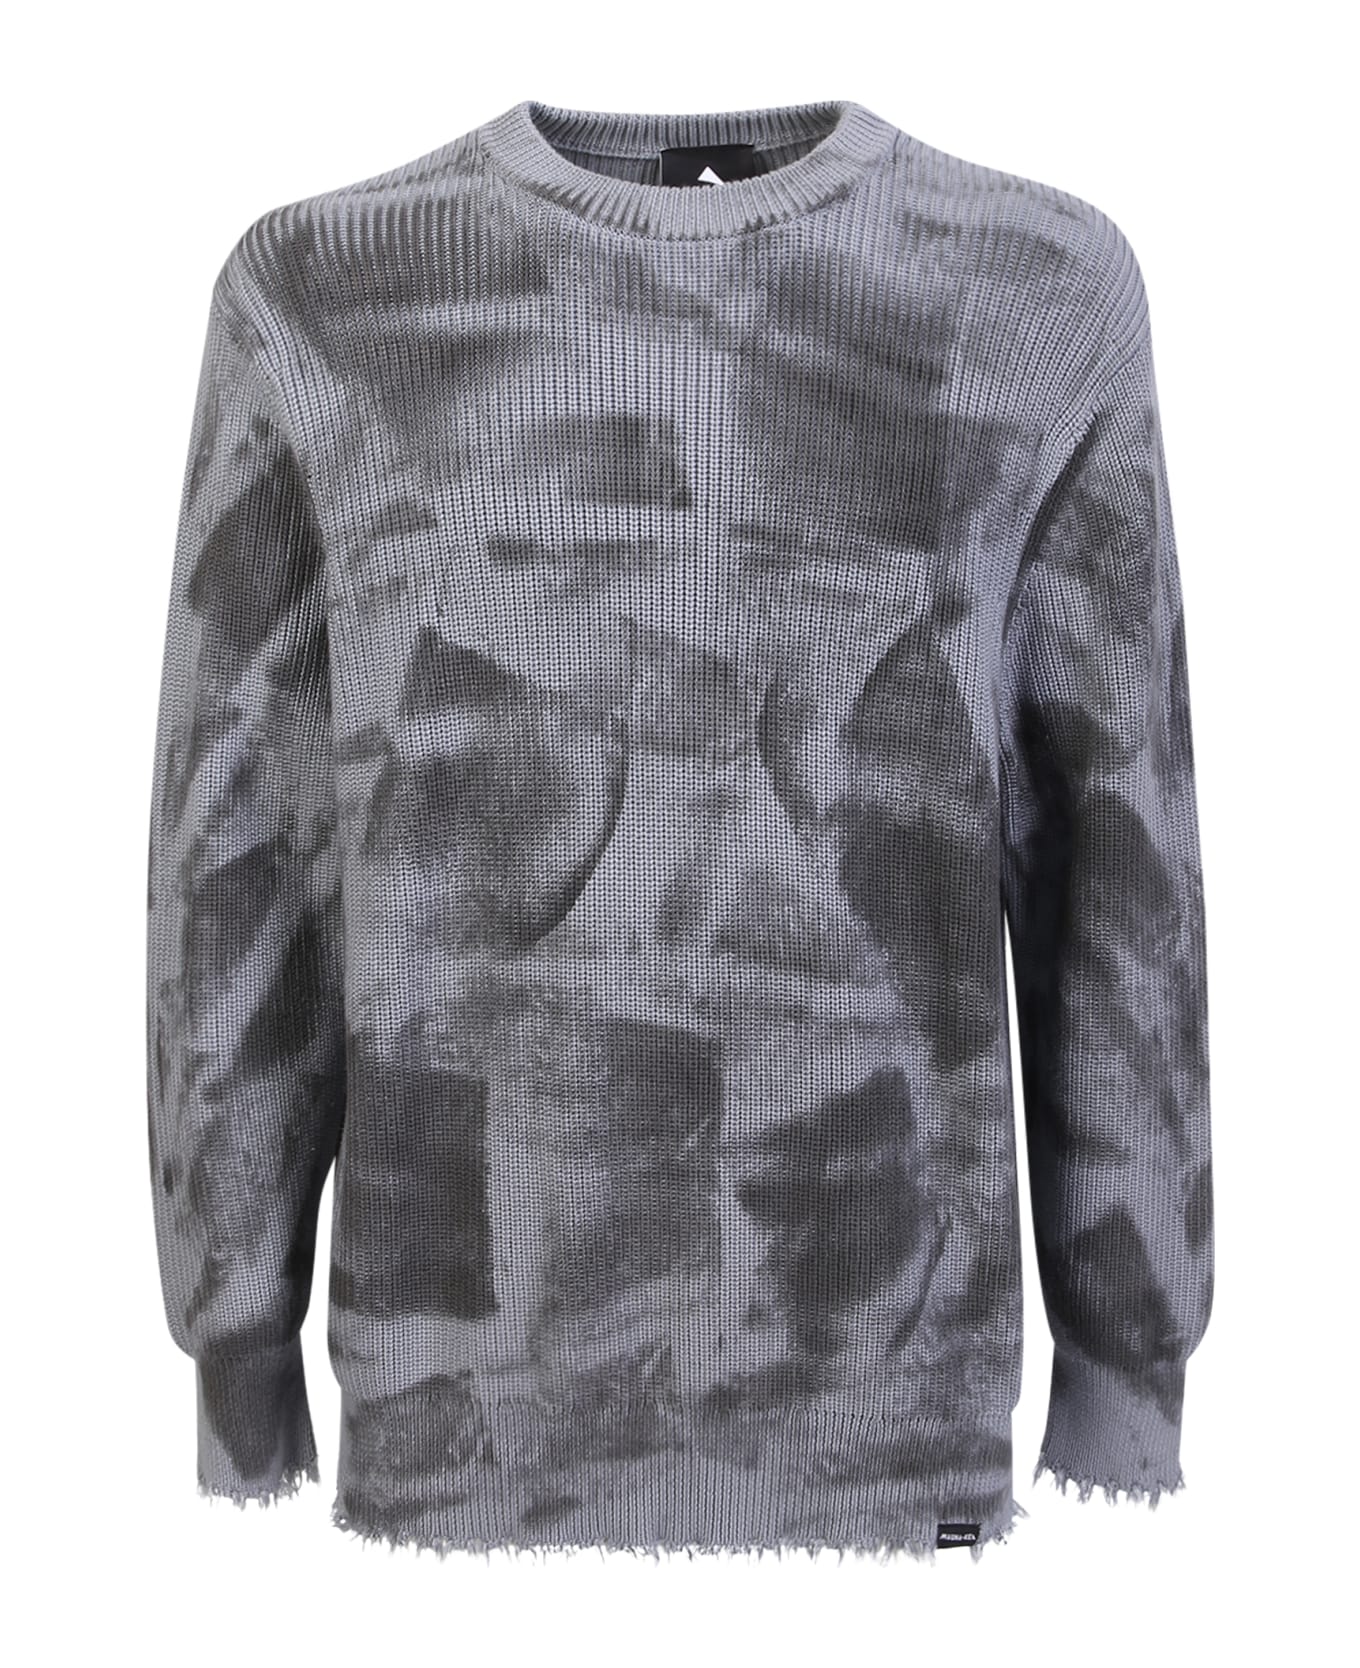 Mauna Kea Cotton Pinture Effect Sweater - Grey